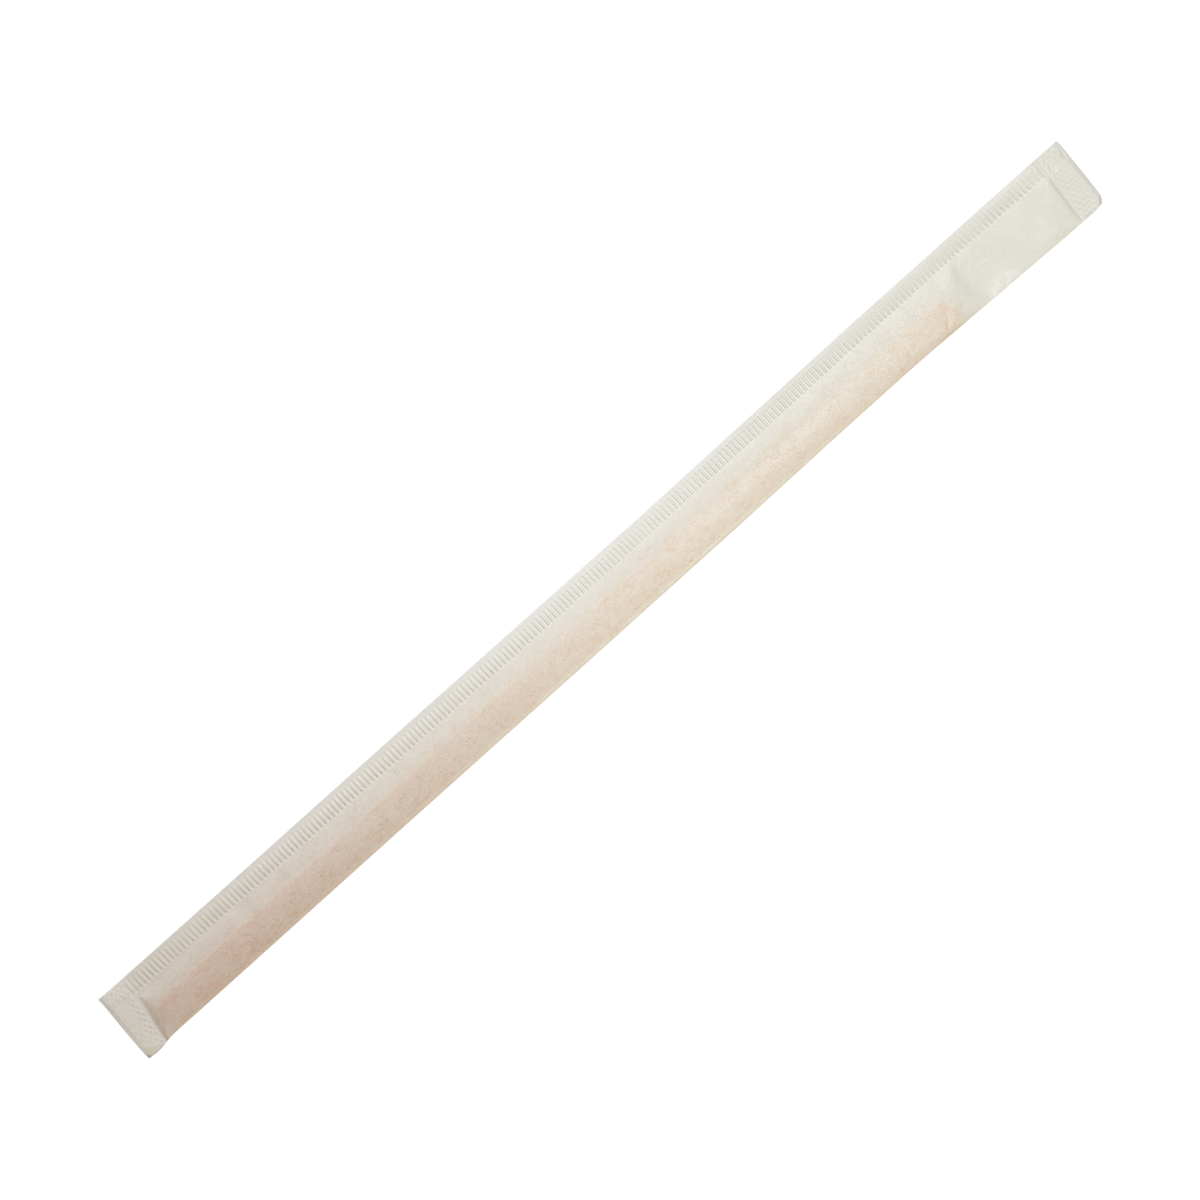 7.5 Inch Wooden Coffee Stirrers - Wood Stir Sticks